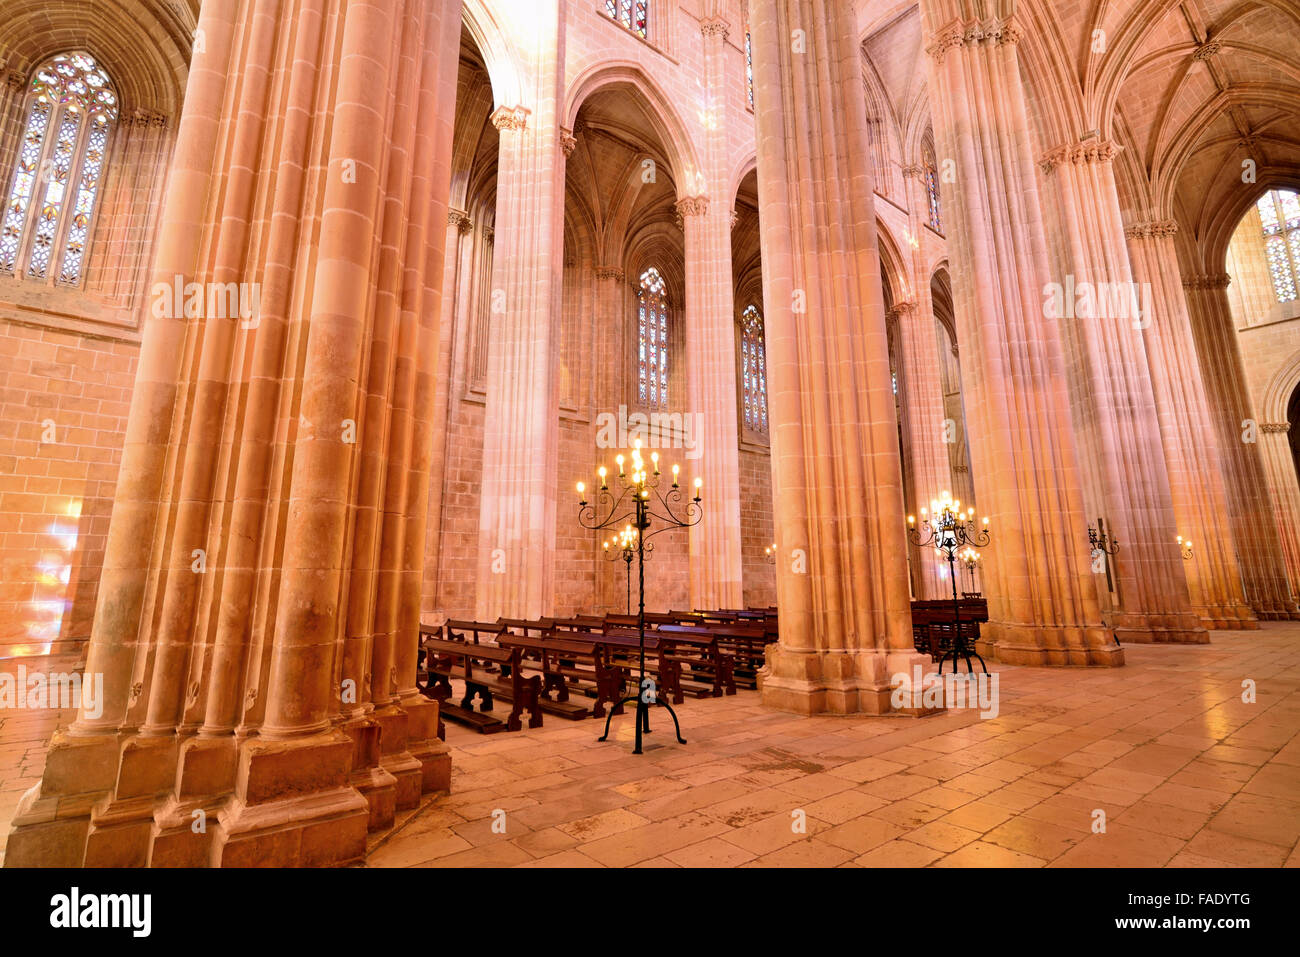 Portugal: Nave and gothic columns of the of monastery church Santa Maria da Vitoria in Batalha Stock Photo